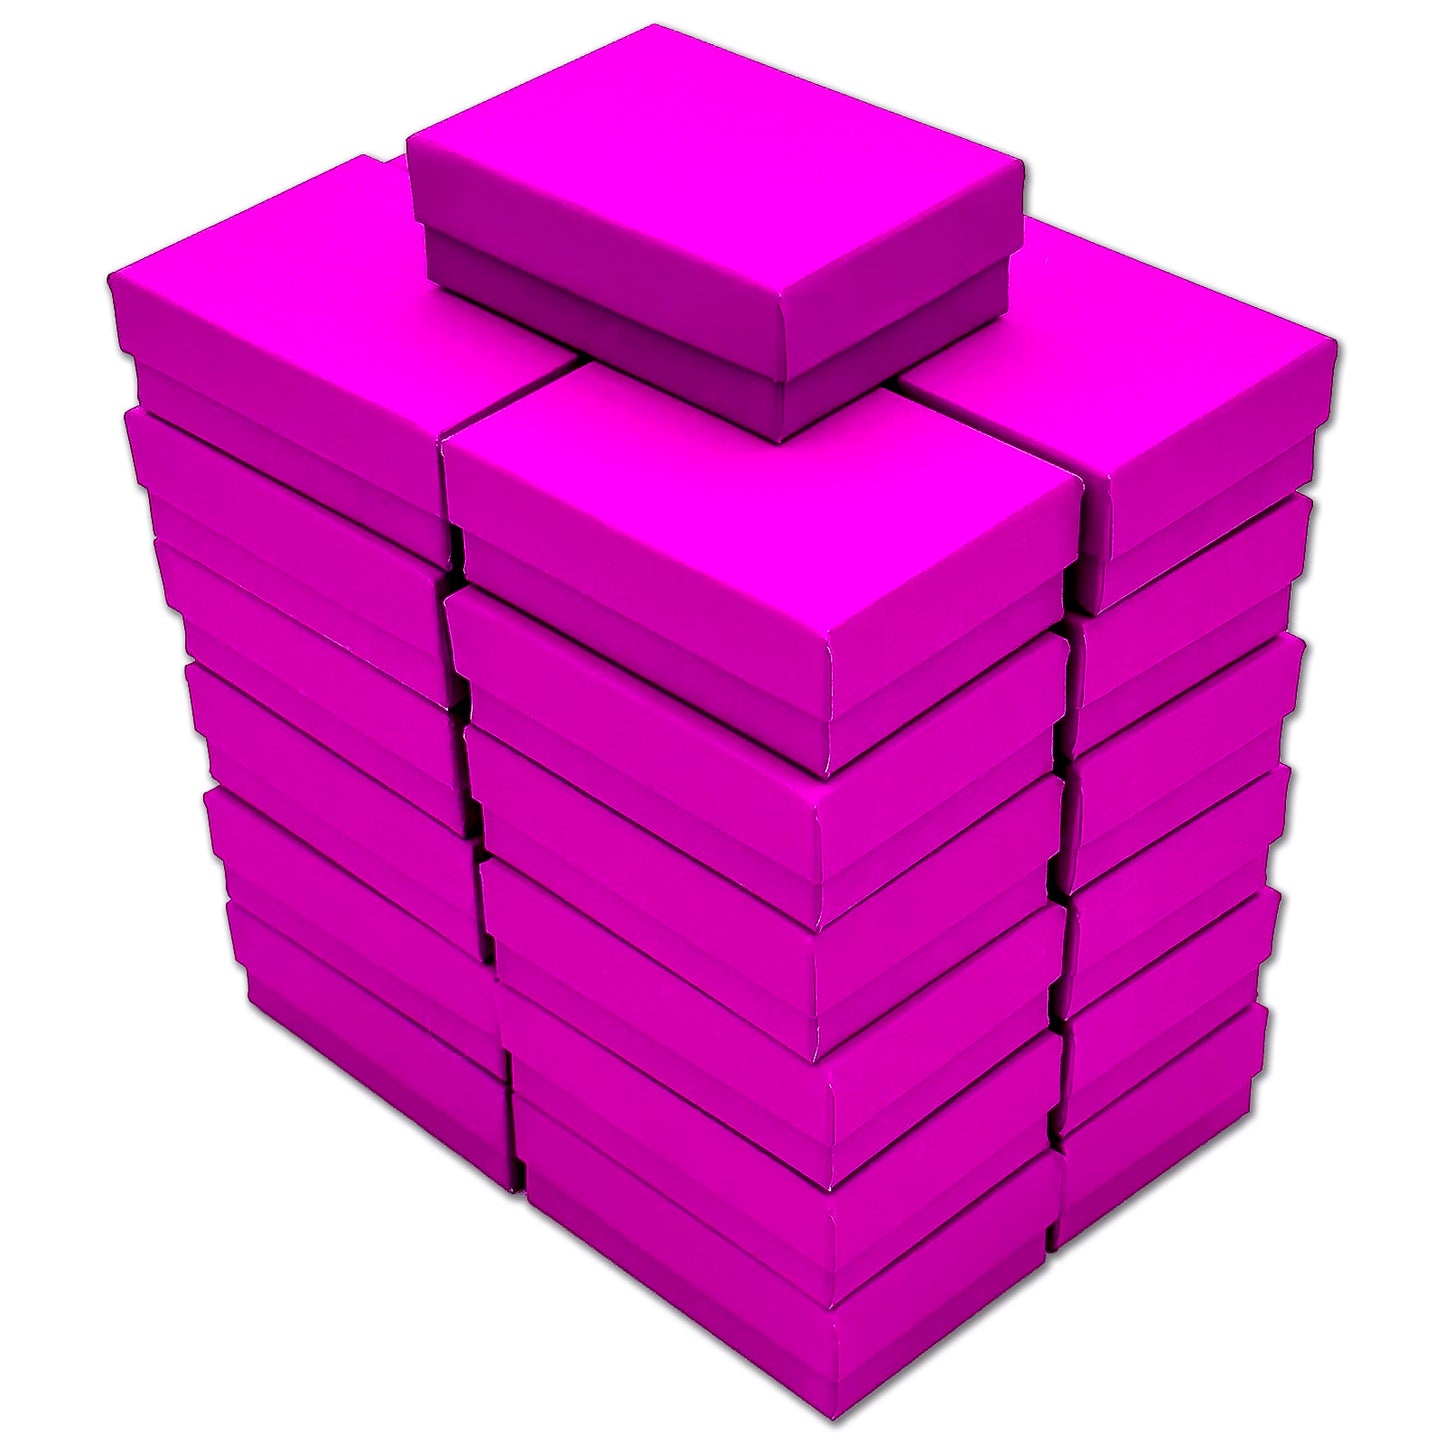 3 1/4" x 2 1/4" x 1" Neon Purple Cotton Filled Paper Box